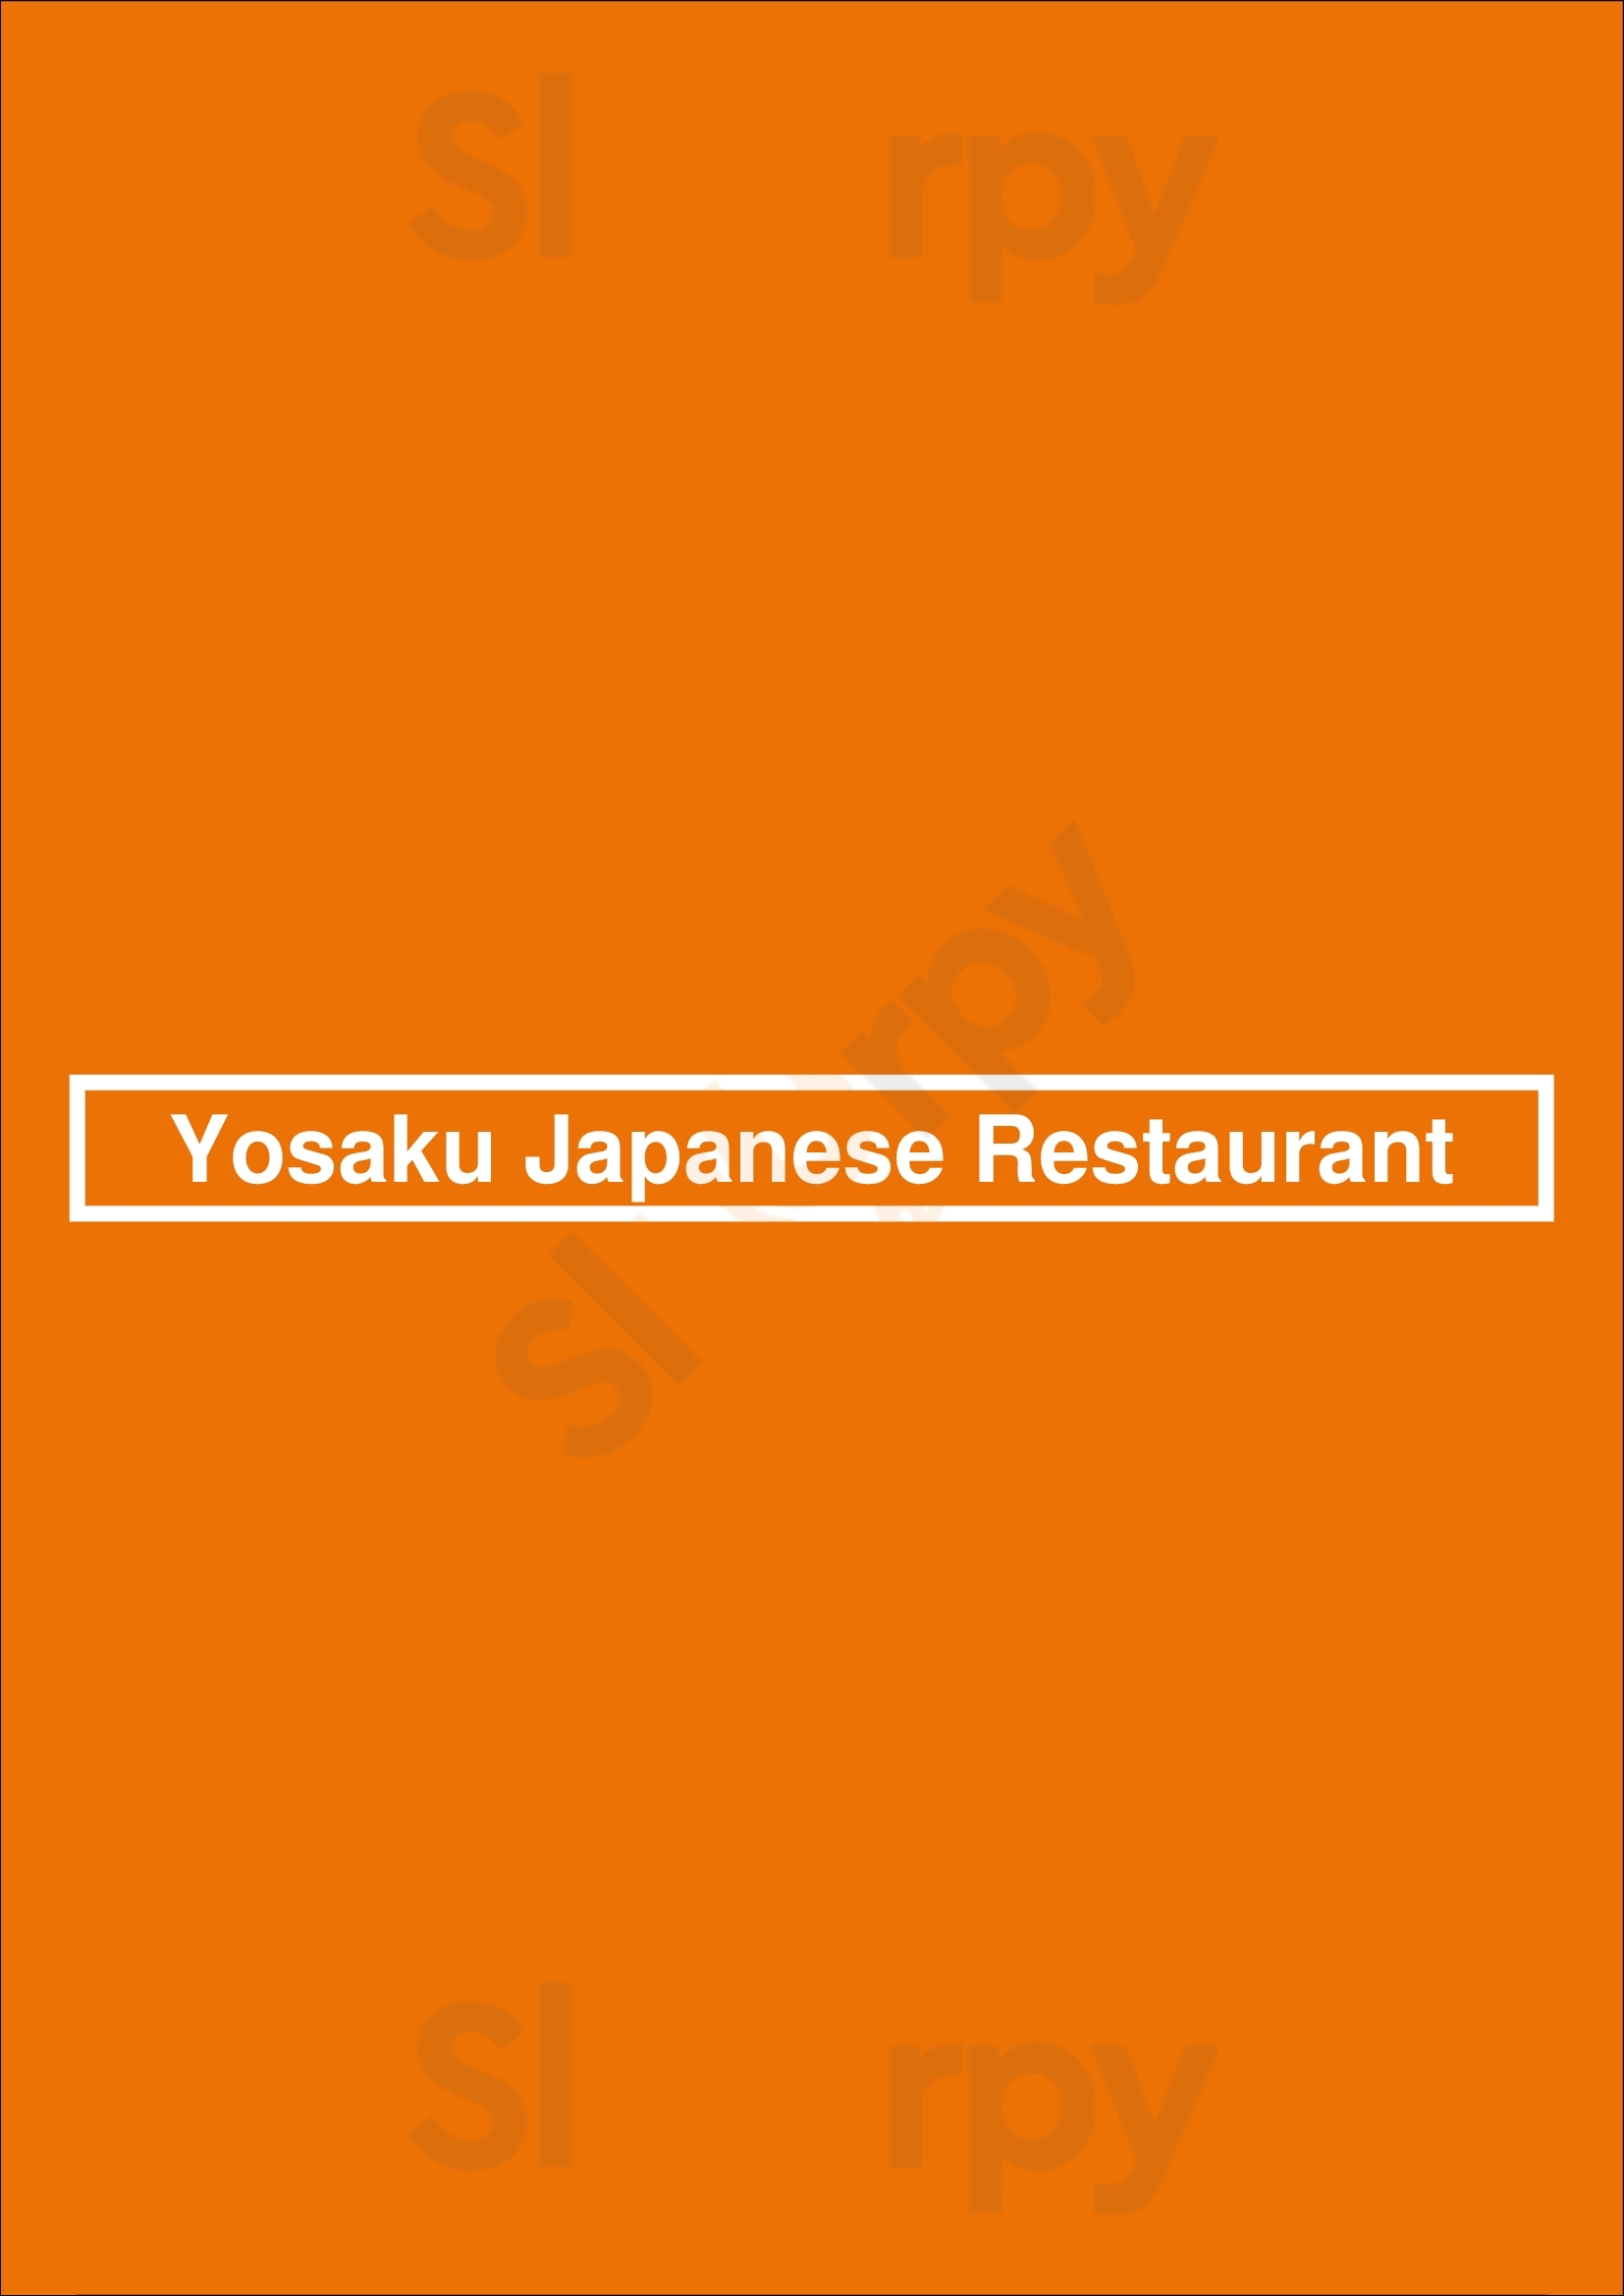 Yosaku Japanese Restaurant Washington DC Menu - 1